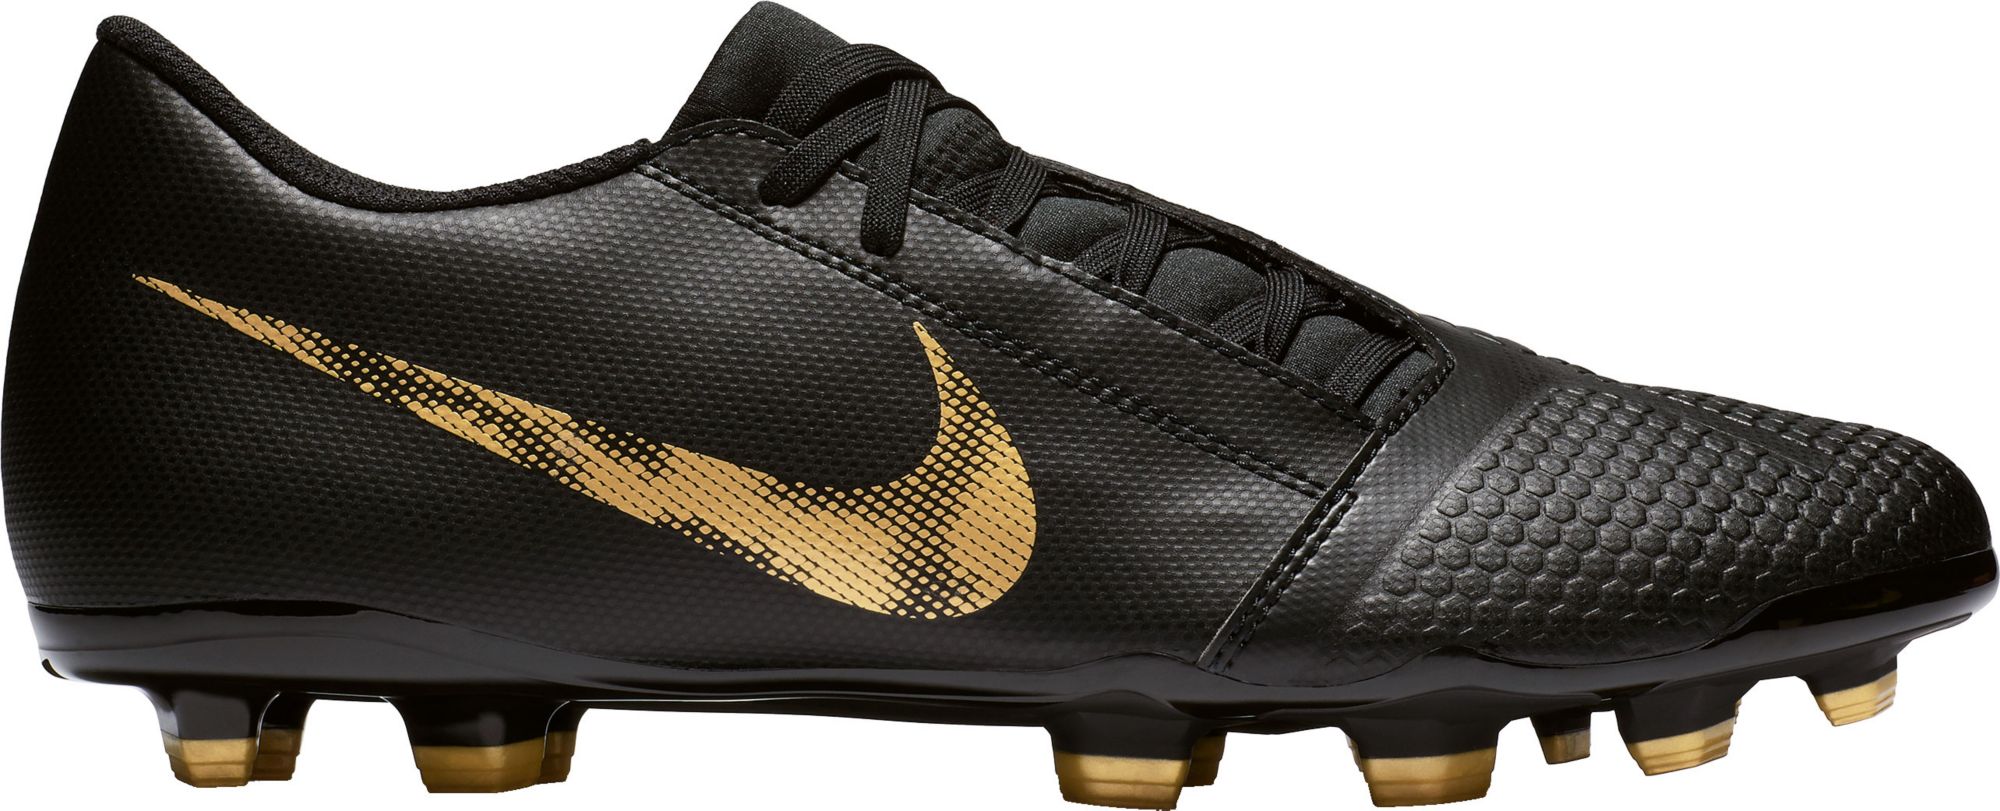 black gold nike football boots